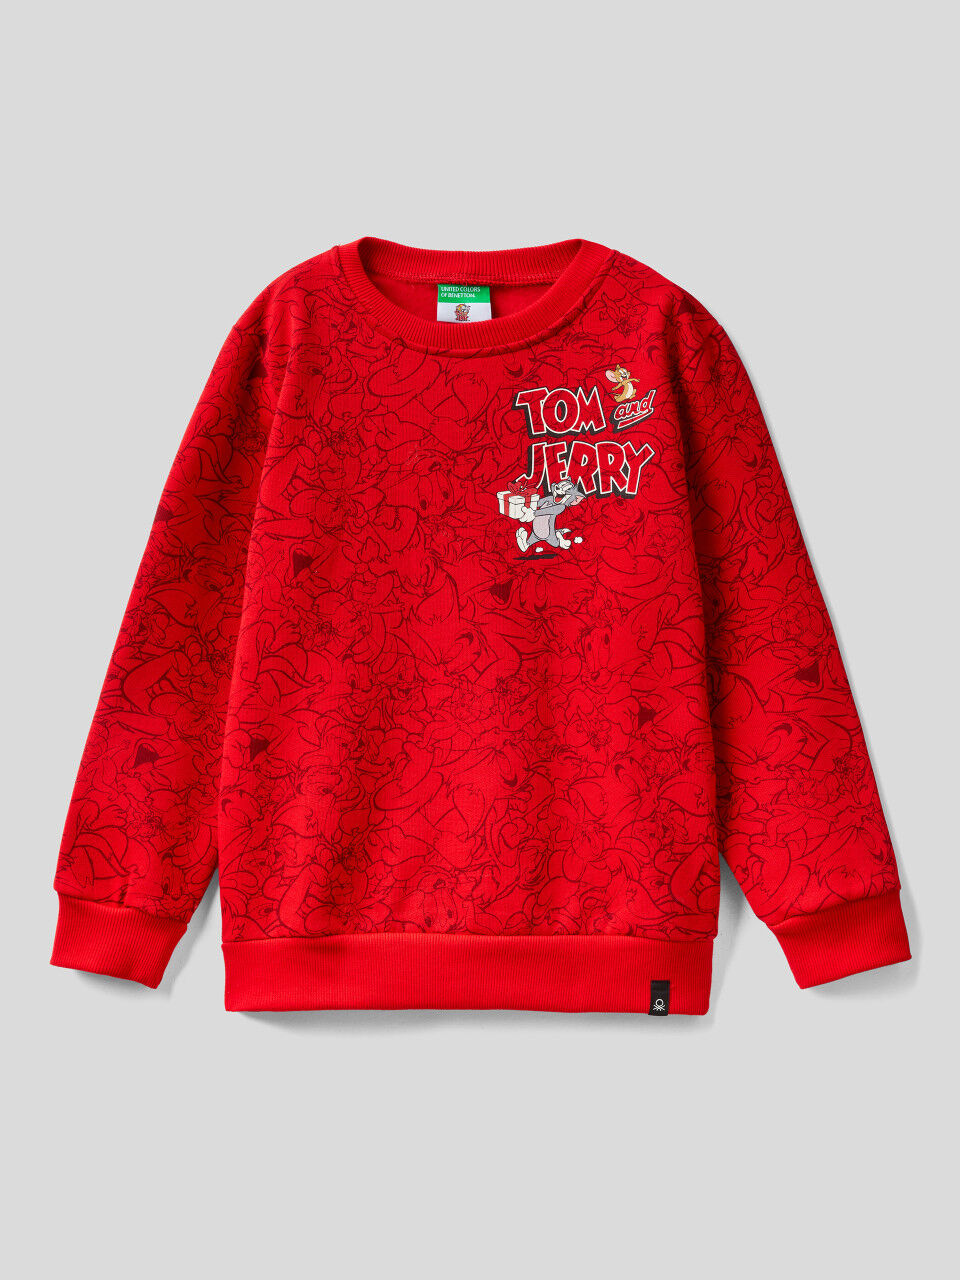 Benetton sweatshirt discount 81% Red/Multicolored KIDS FASHION Jumpers & Sweatshirts Print 